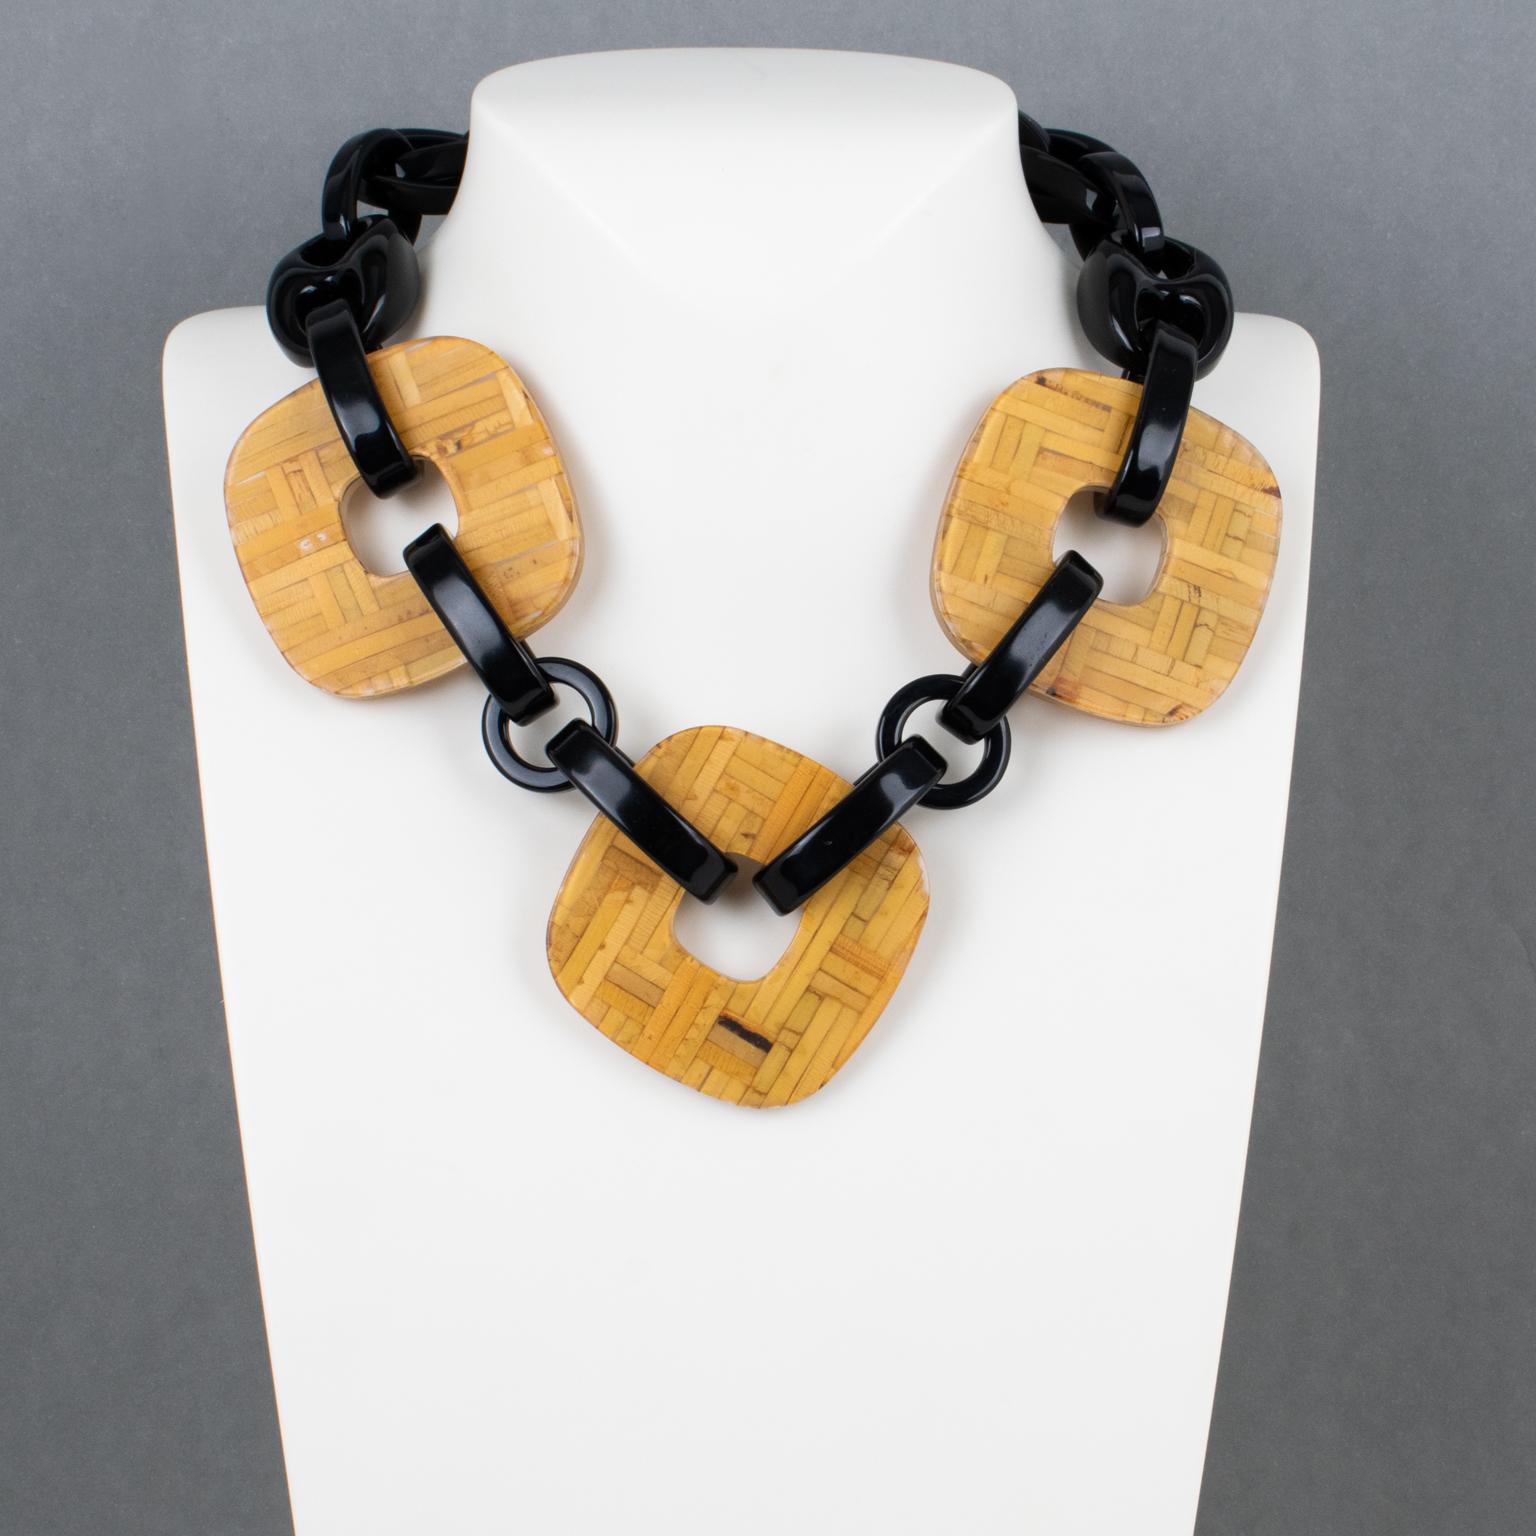 Modern Angela Caputi Black Resin and Rattan Choler Necklace For Sale